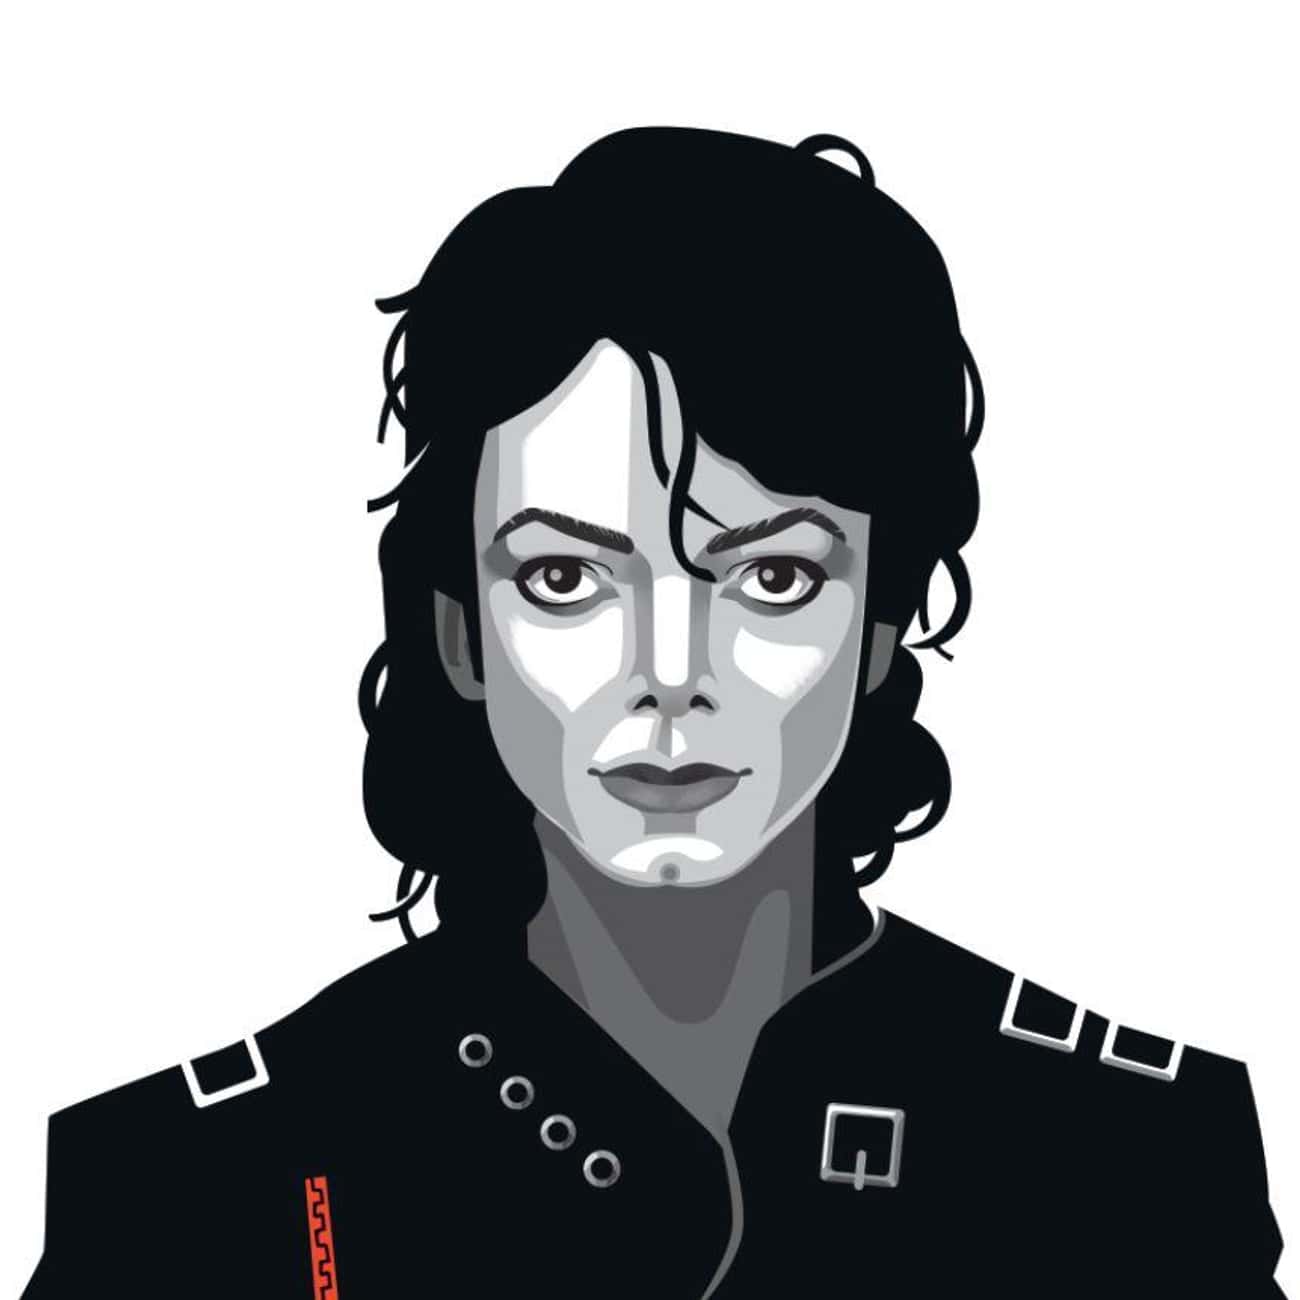 456 Tweets Per Second When Michael Jackson Died